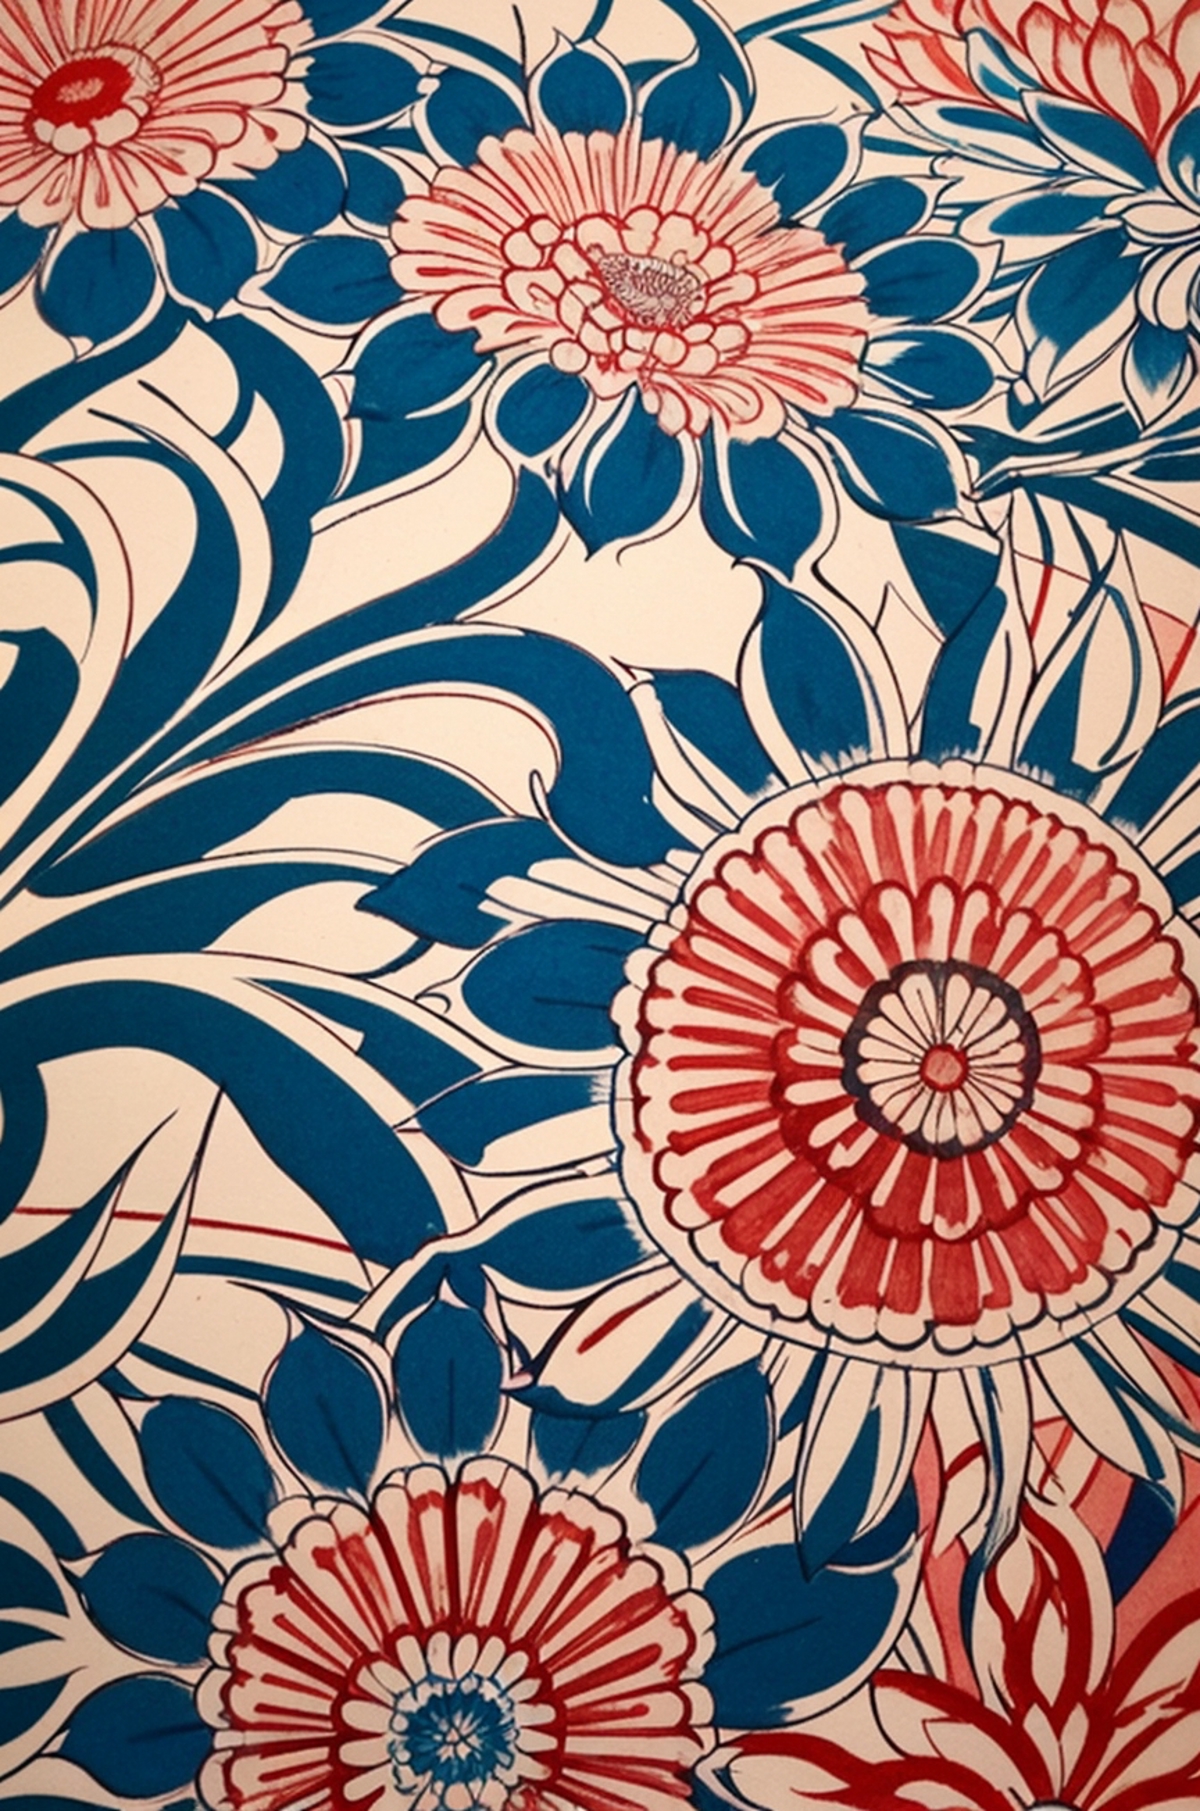 Shin-Bijutsukai (Japanese textile patterns, 1902-1906) image by p_p